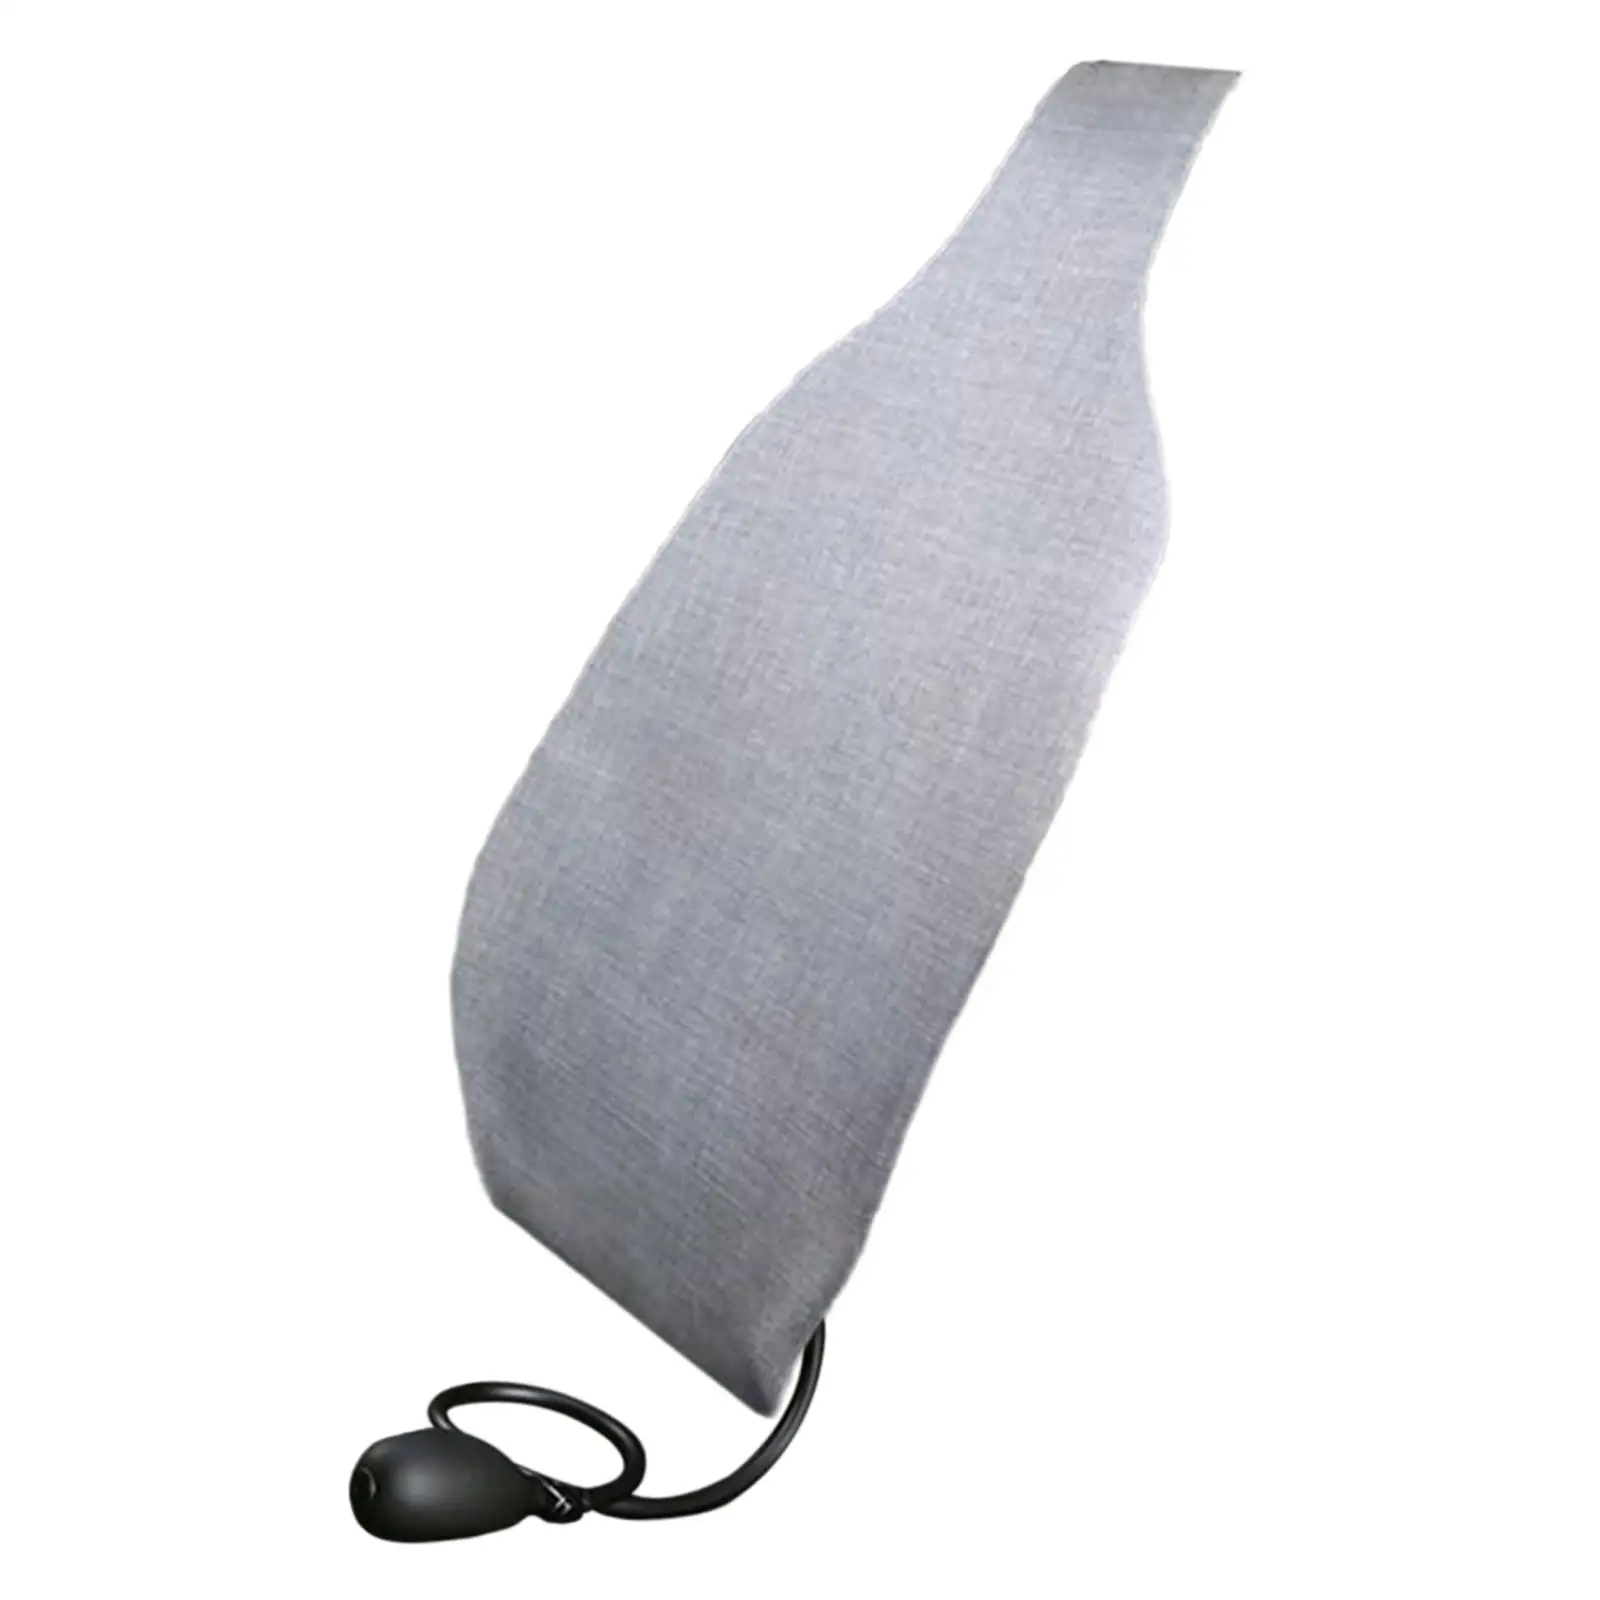 Car Support Cushion Back Cushion Ergonomic Design Anti Slip Easy to Install Motion Backrest for Long Sitting